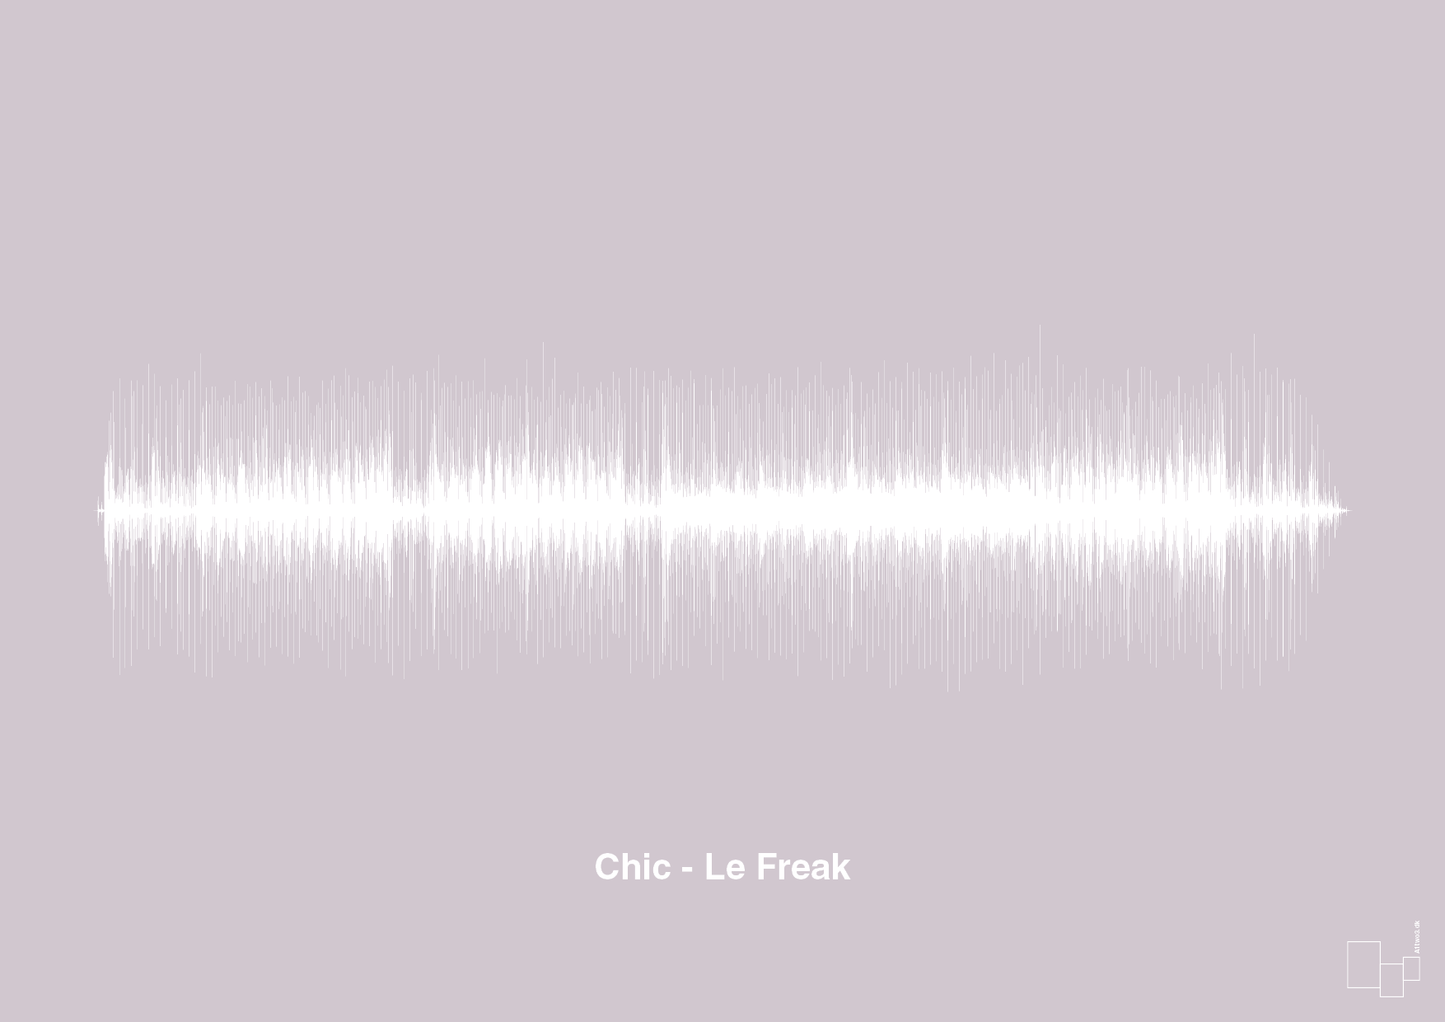 chic - le freak - Plakat med Musik i Dusty Lilac